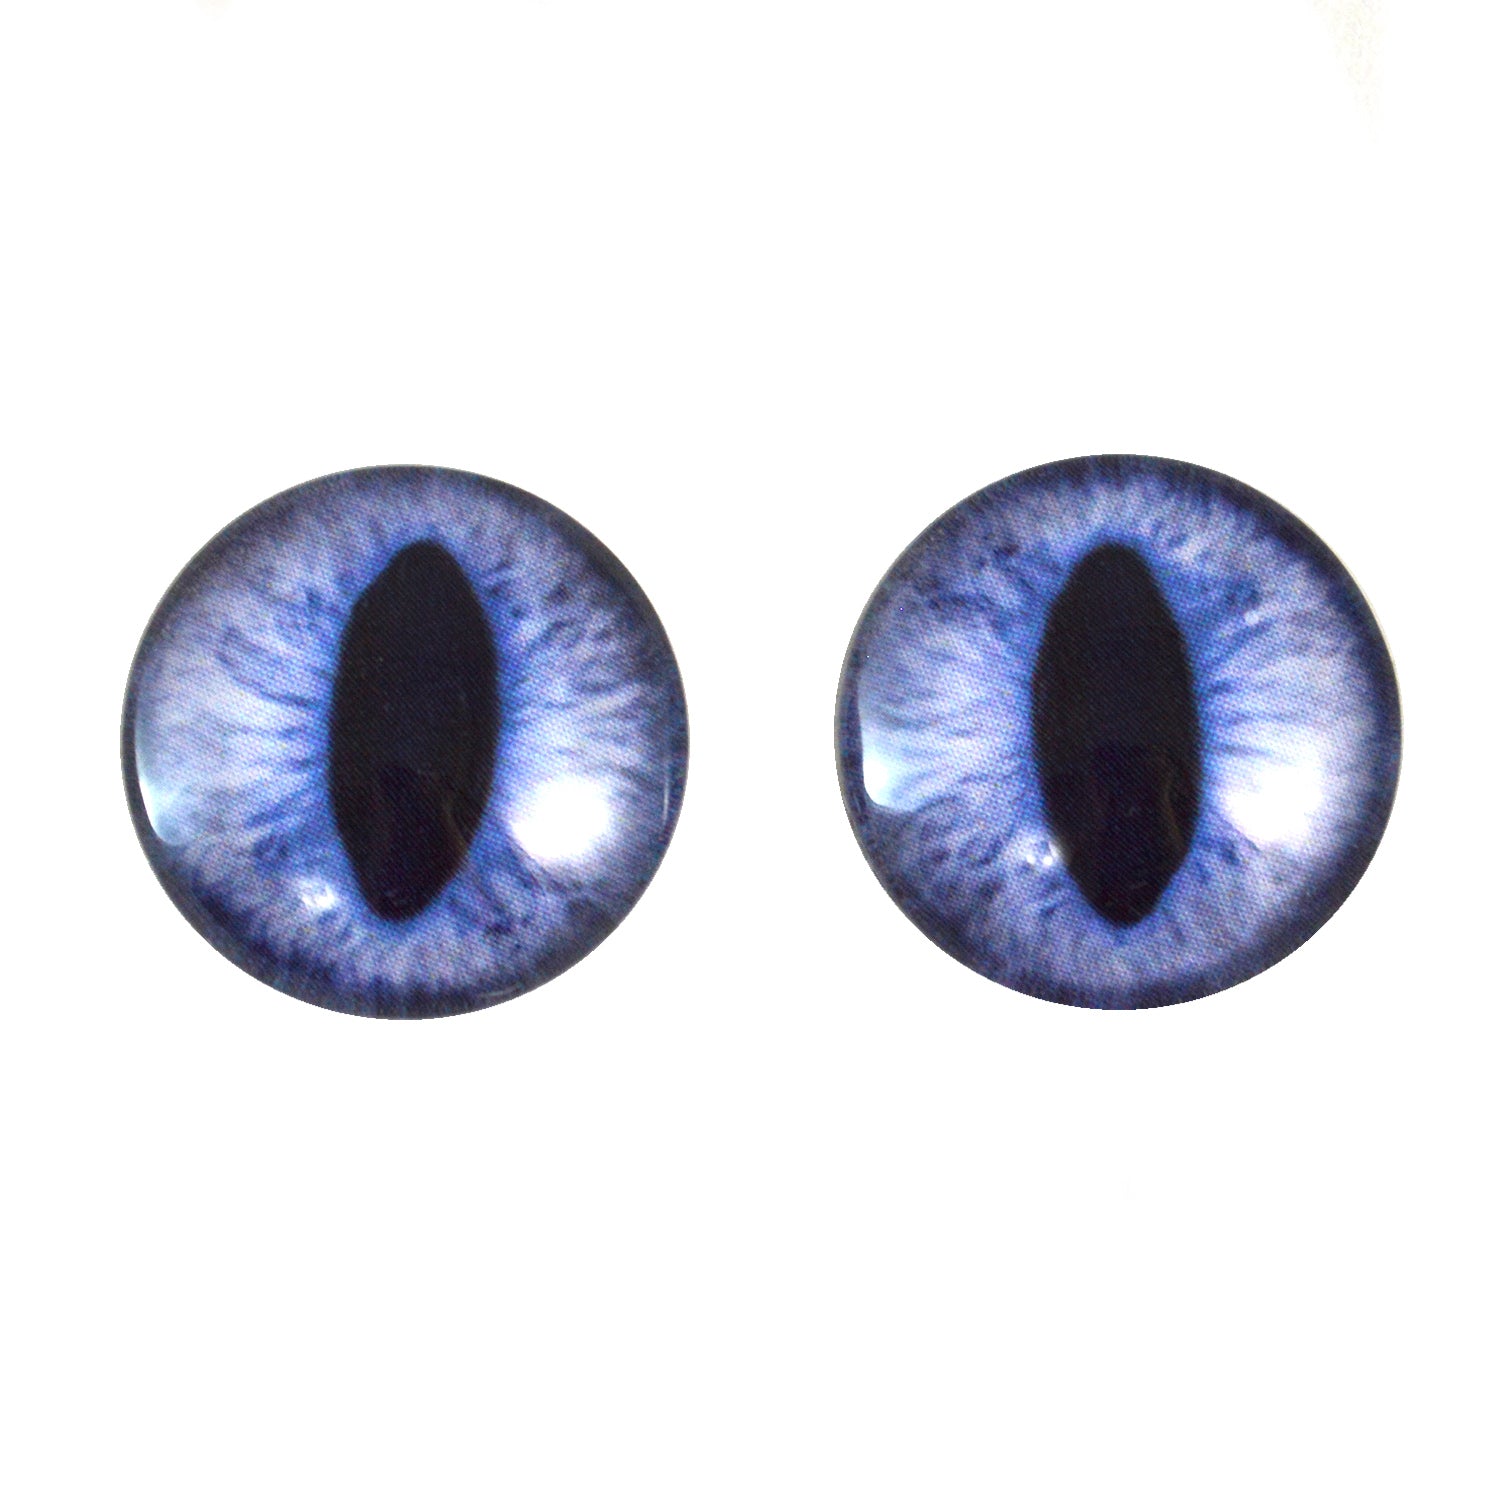 Glass Eyes, Blue Eyes, Dragon Eyes, Creature Eyes, Blue Cat Eyes, Eyes for  Sculptures, Crafts, Etc. One Pair Choose Size From Menu. 